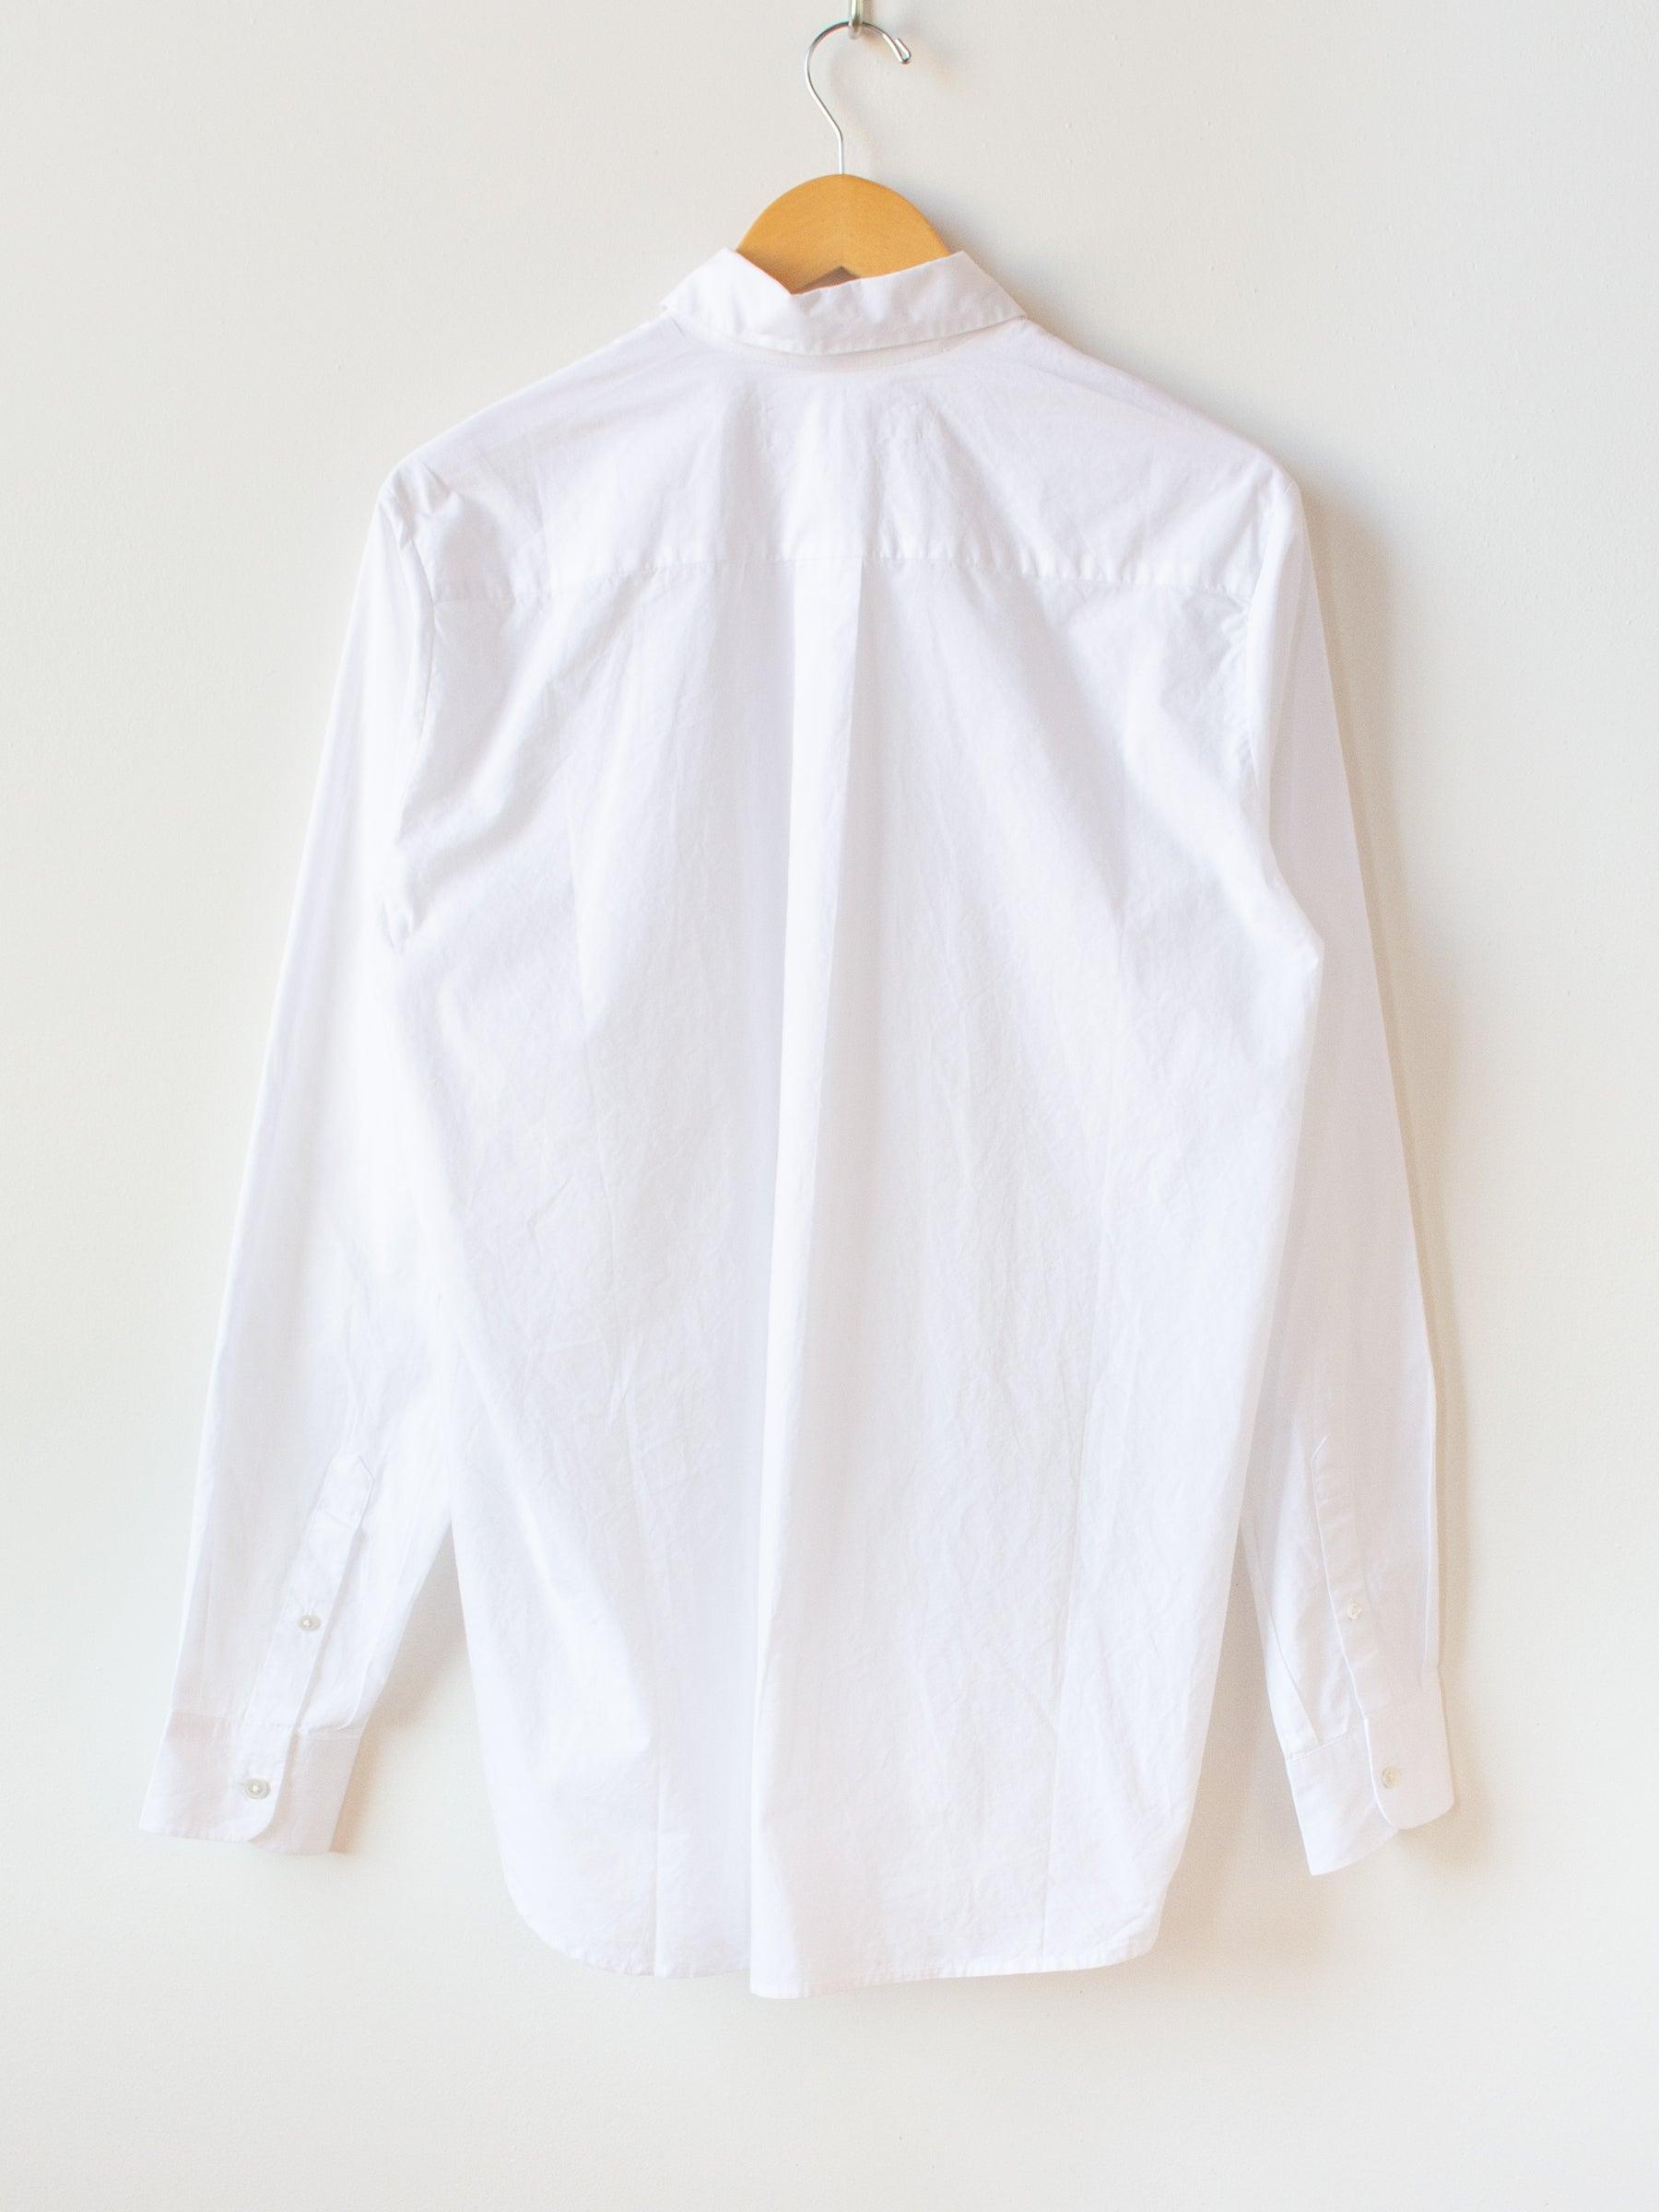 Namu Shop - Jan Machenhauer Chris Shirt - White Cotton Poplin